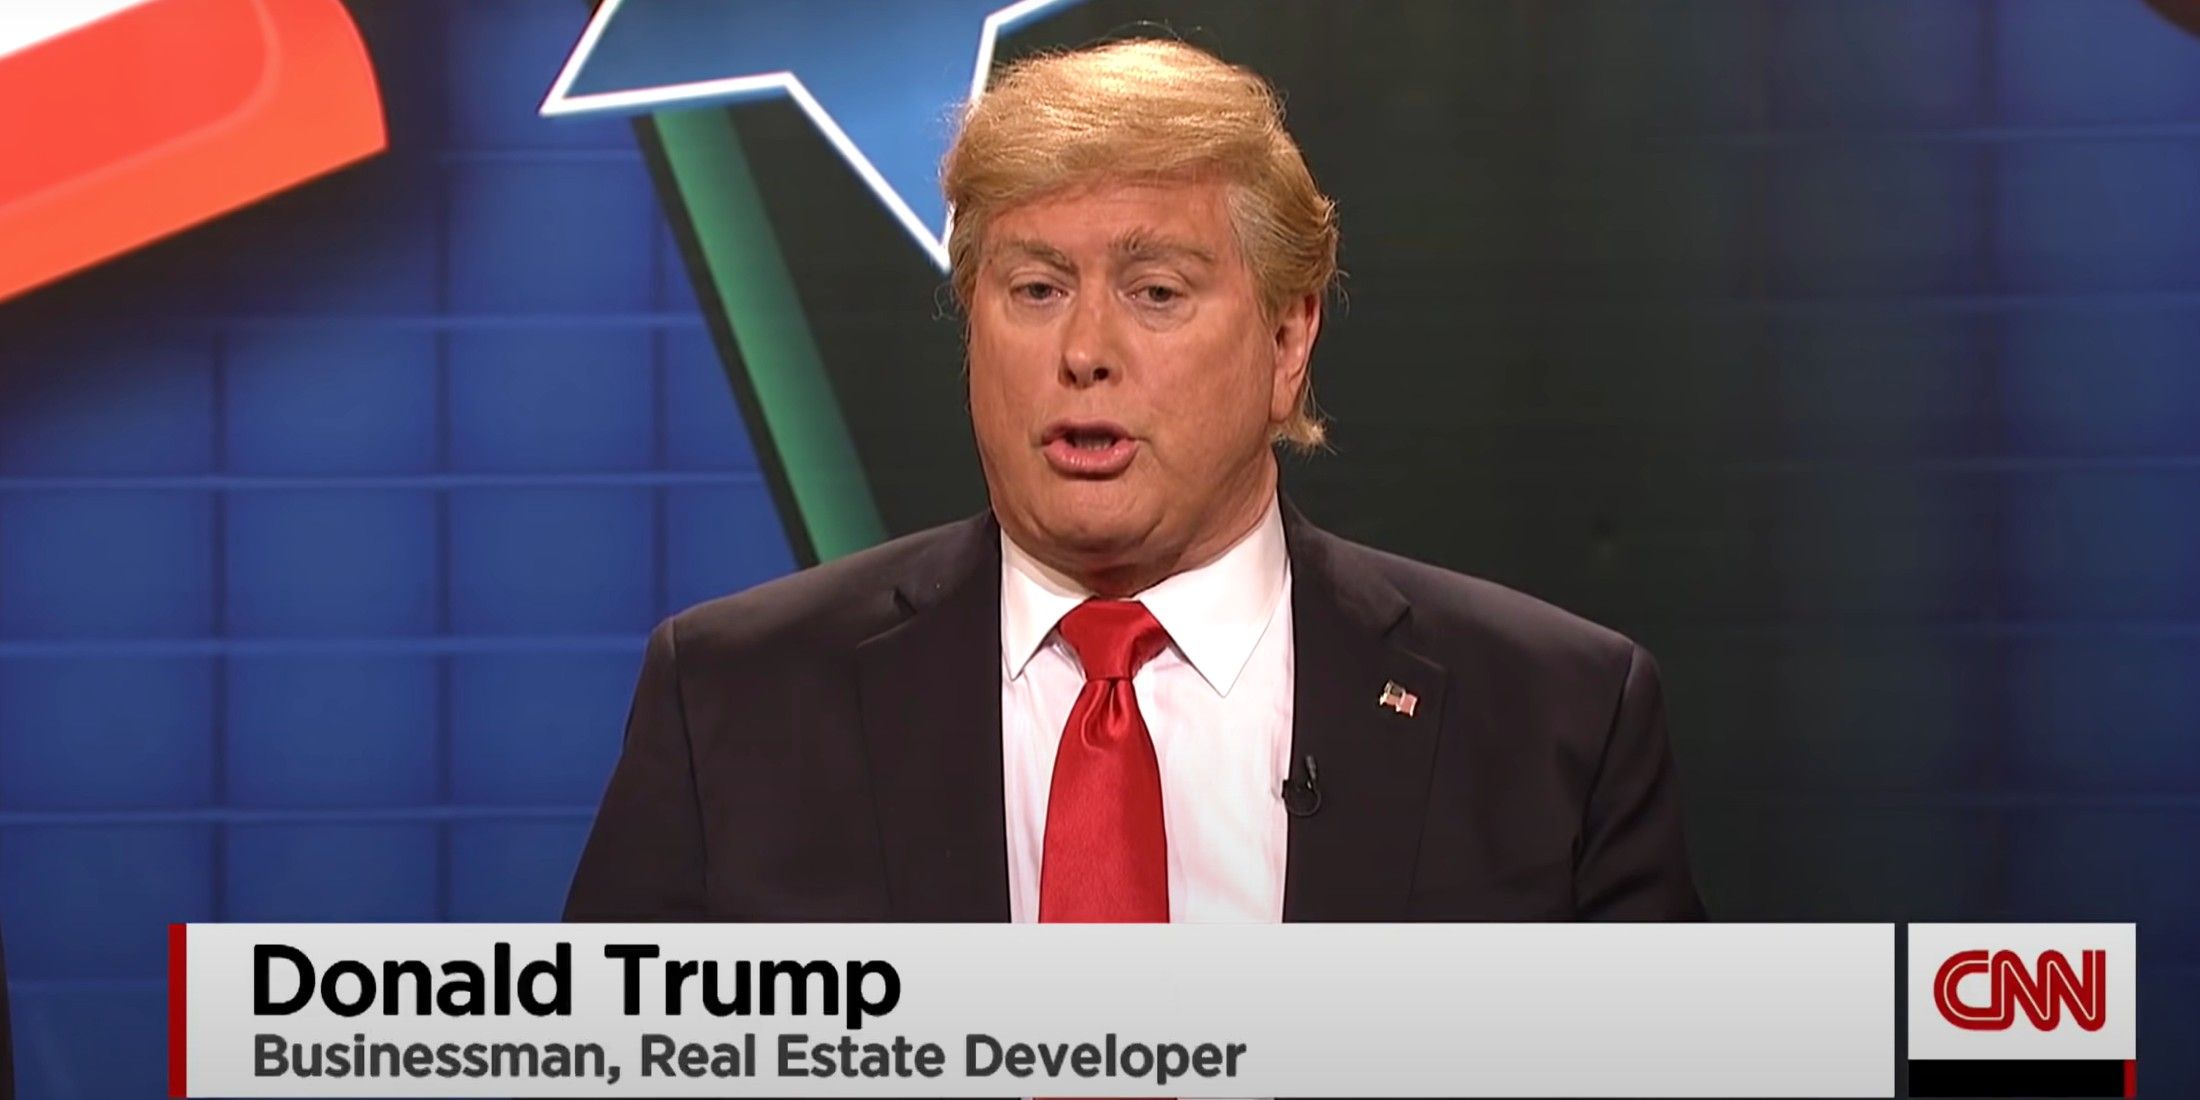 Darrell Hammond as Donald Trump on Saturday Night Live